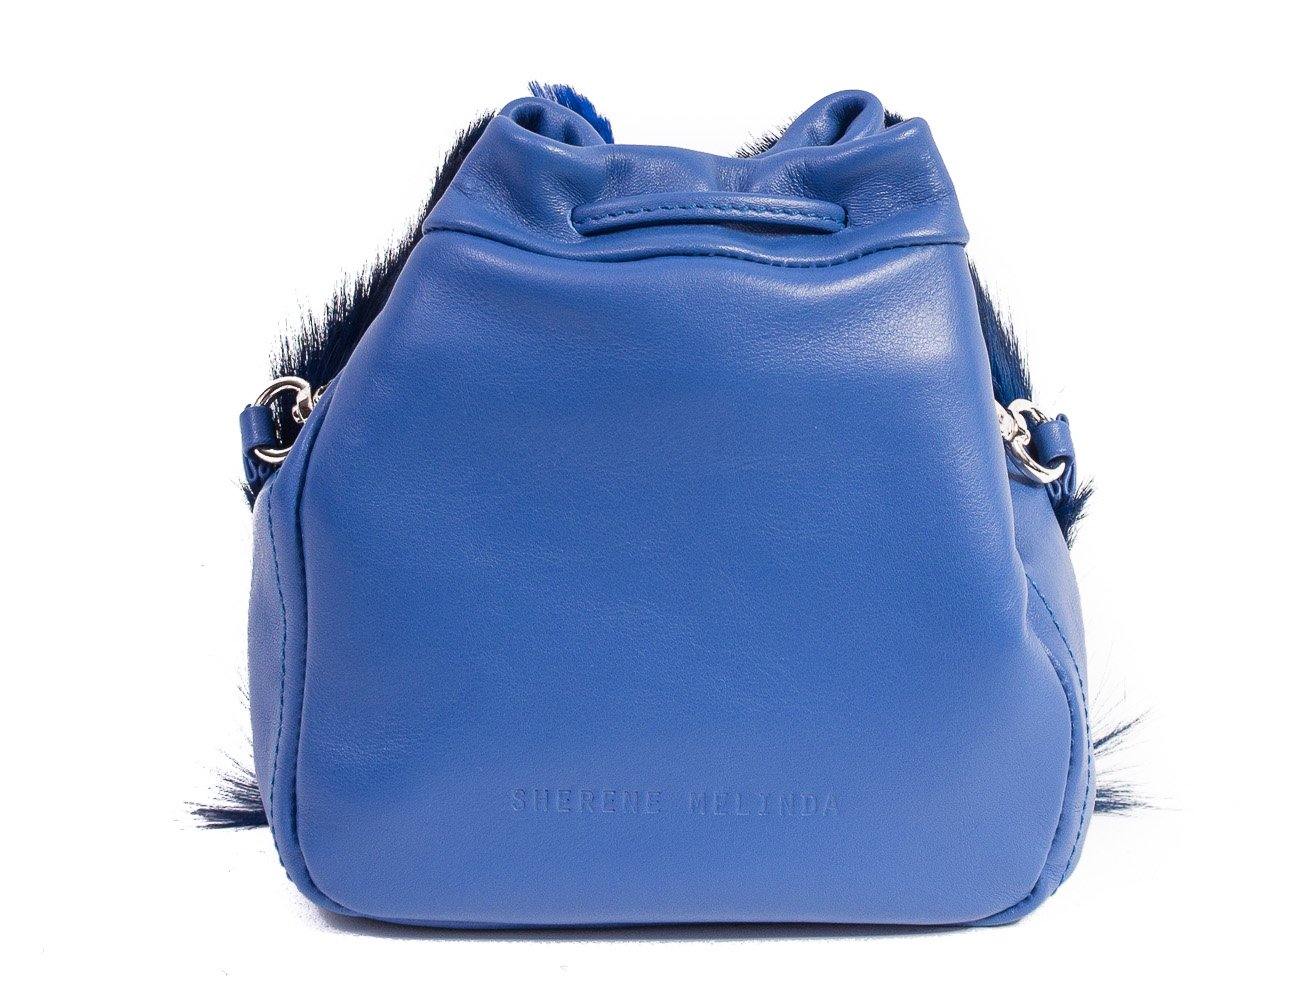 sherene melinda springbok hair-on-hide royal blue leather pouch bag back